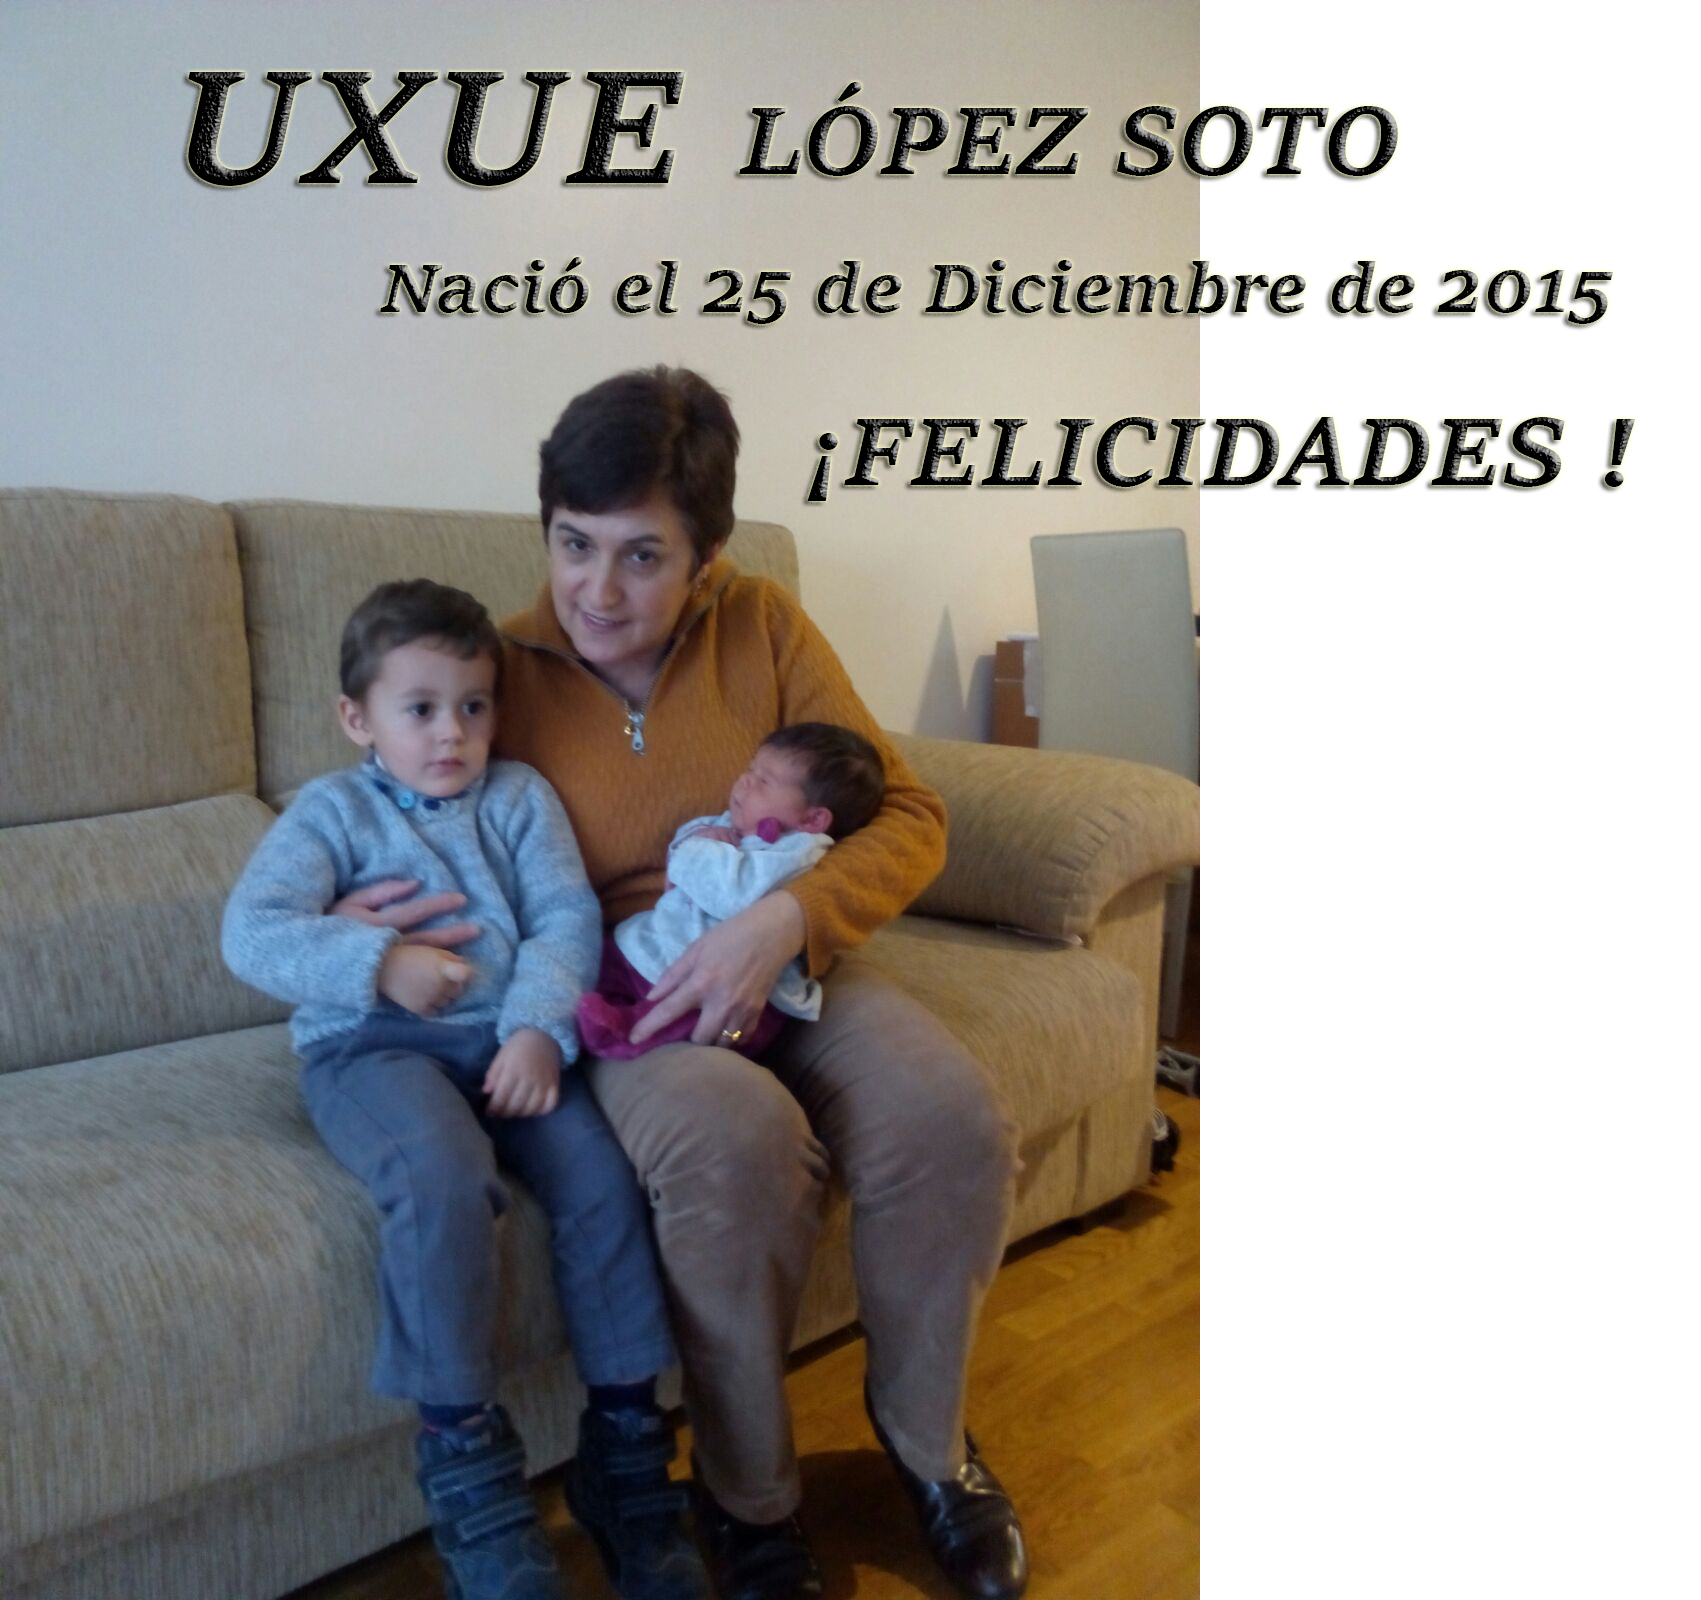 UXUE LÓPEZ SOTO, nació el 25-12-2015